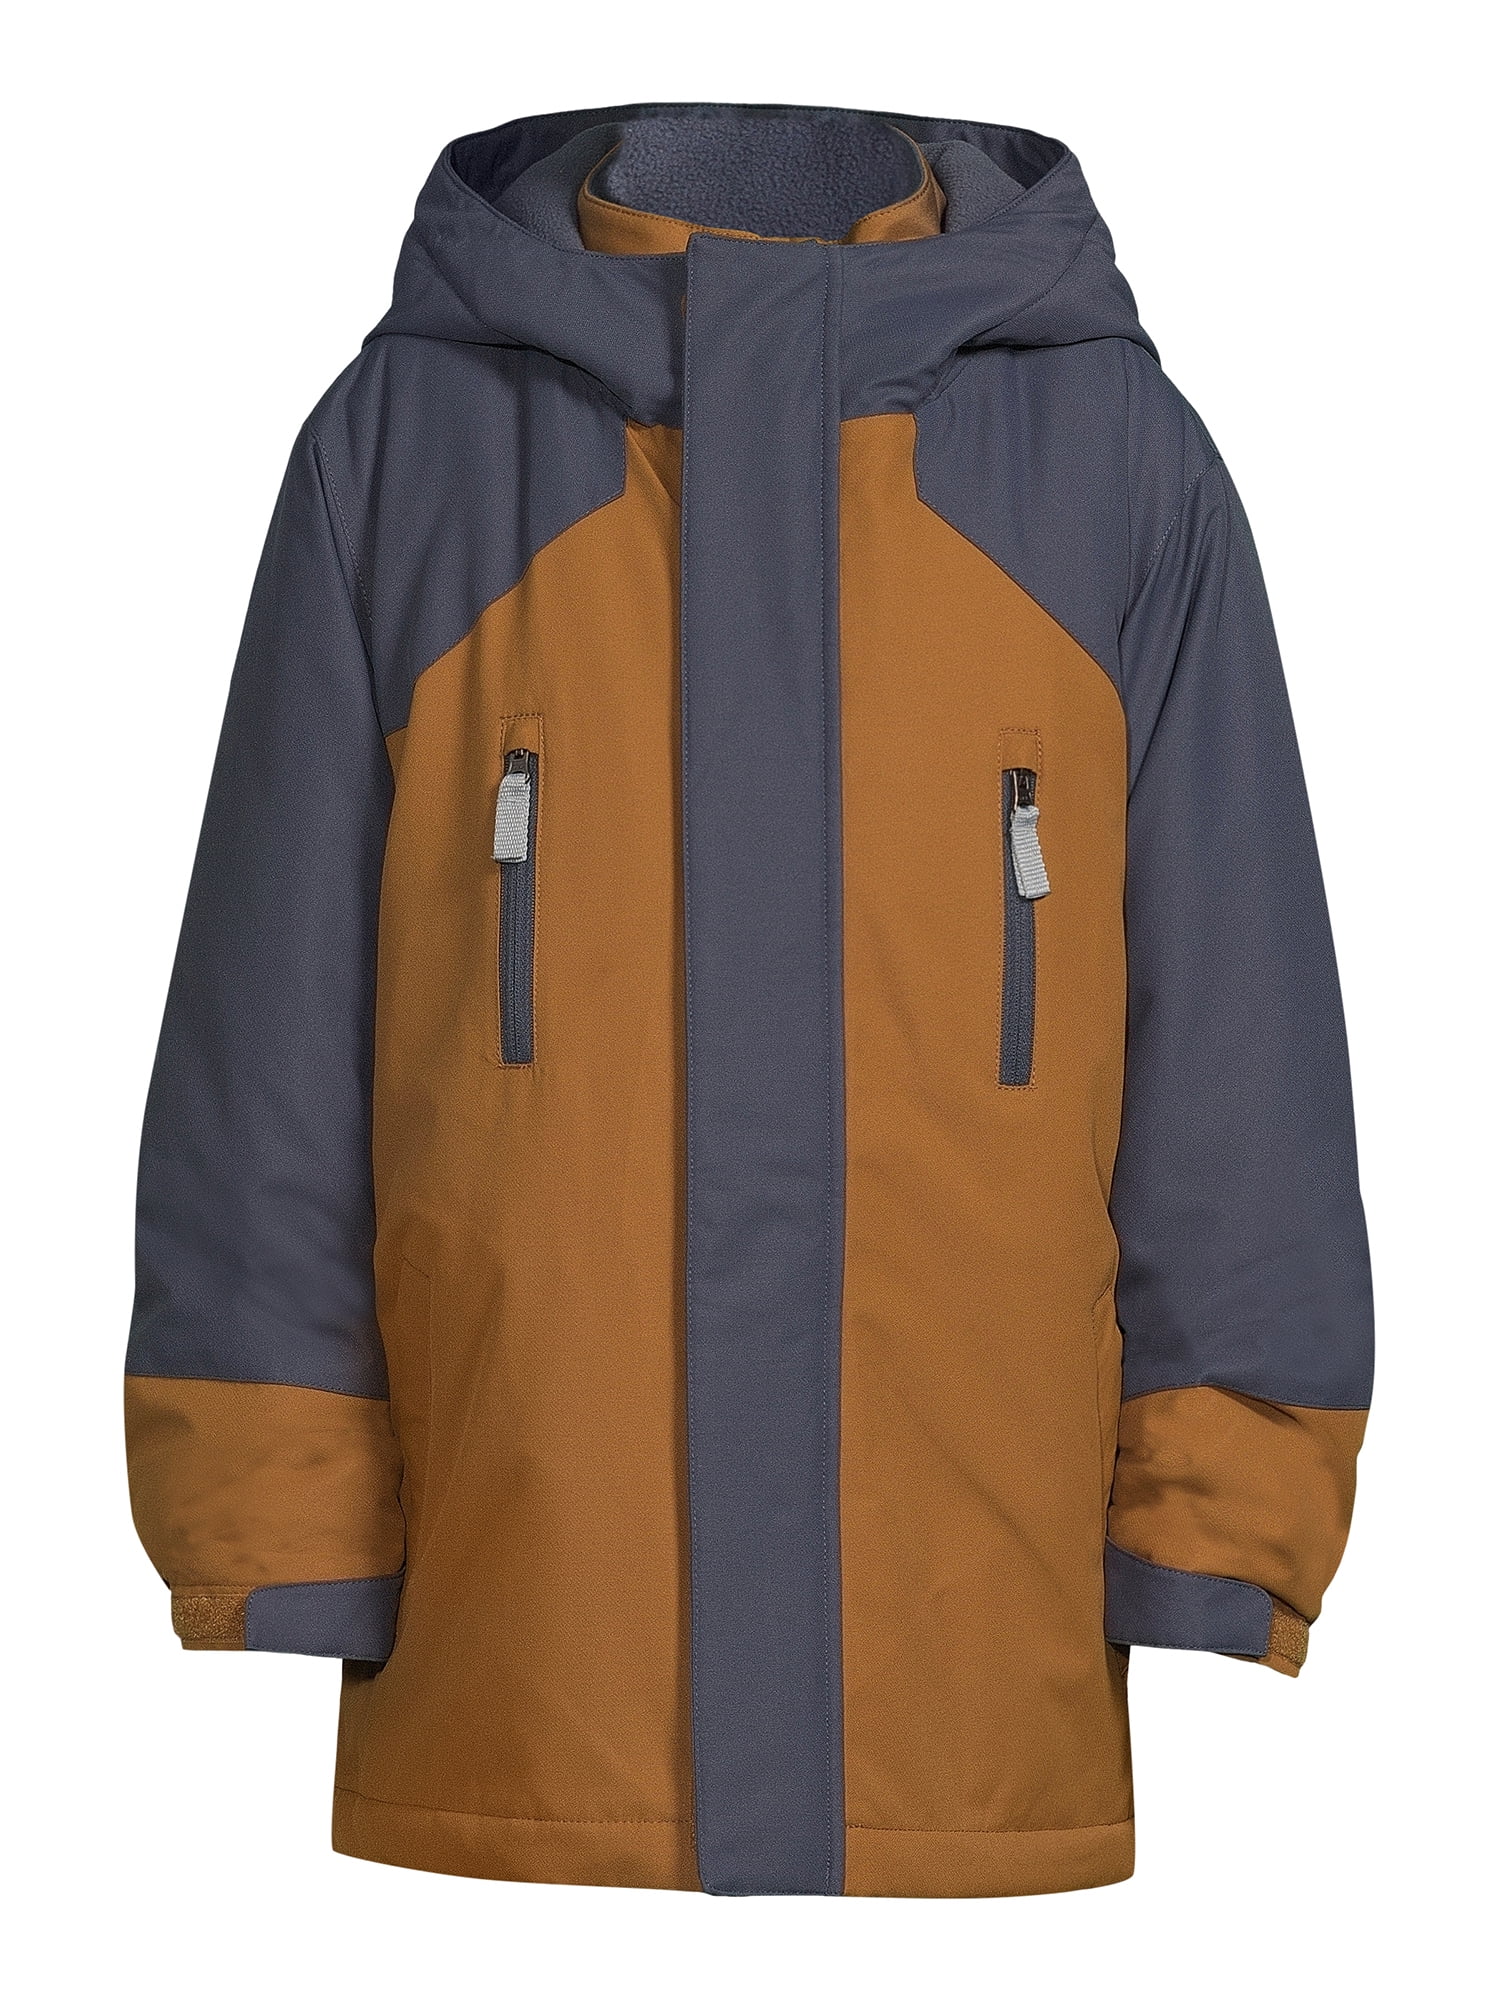 Swiss Tech Boys 3- in-1 System Winter Jacket with Hood, Size 4-18 ...